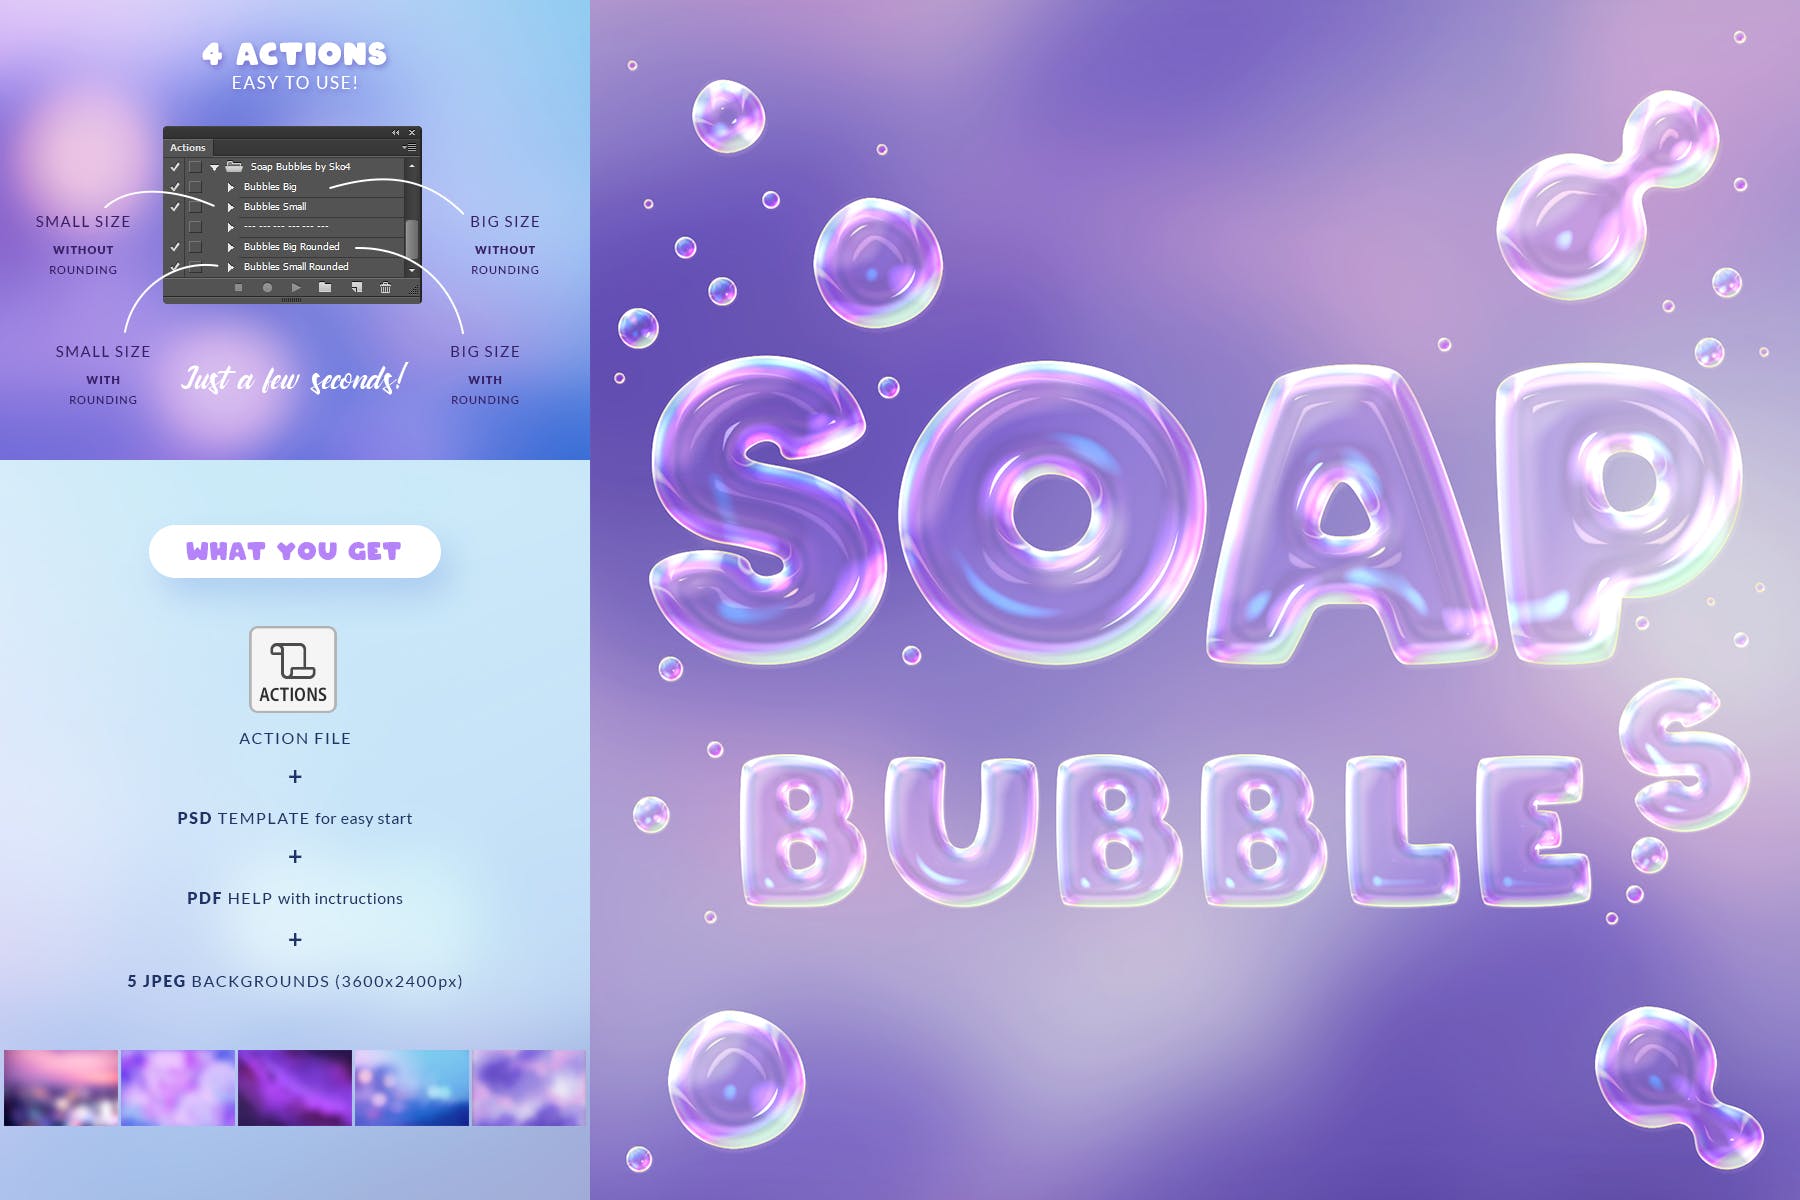 肥皂泡文字特效素材库精选PS动作 Soap Bubbles Photoshop Action插图(2)